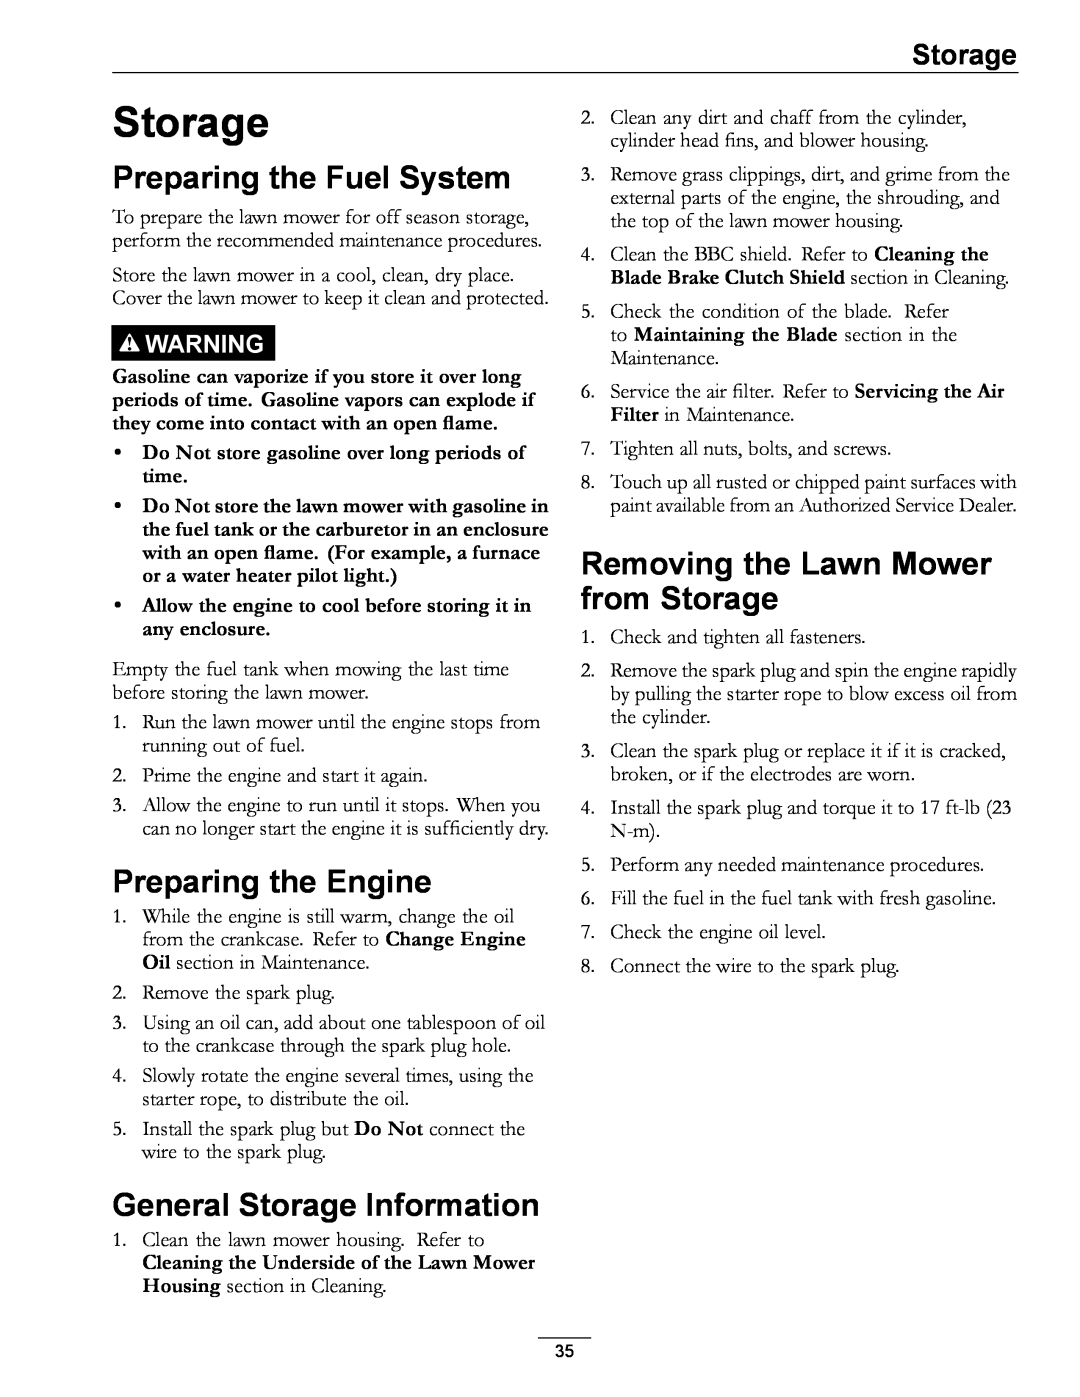 Exmark 4500-686 Rev. B manual Preparing the Fuel System, Preparing the Engine, General Storage Information 